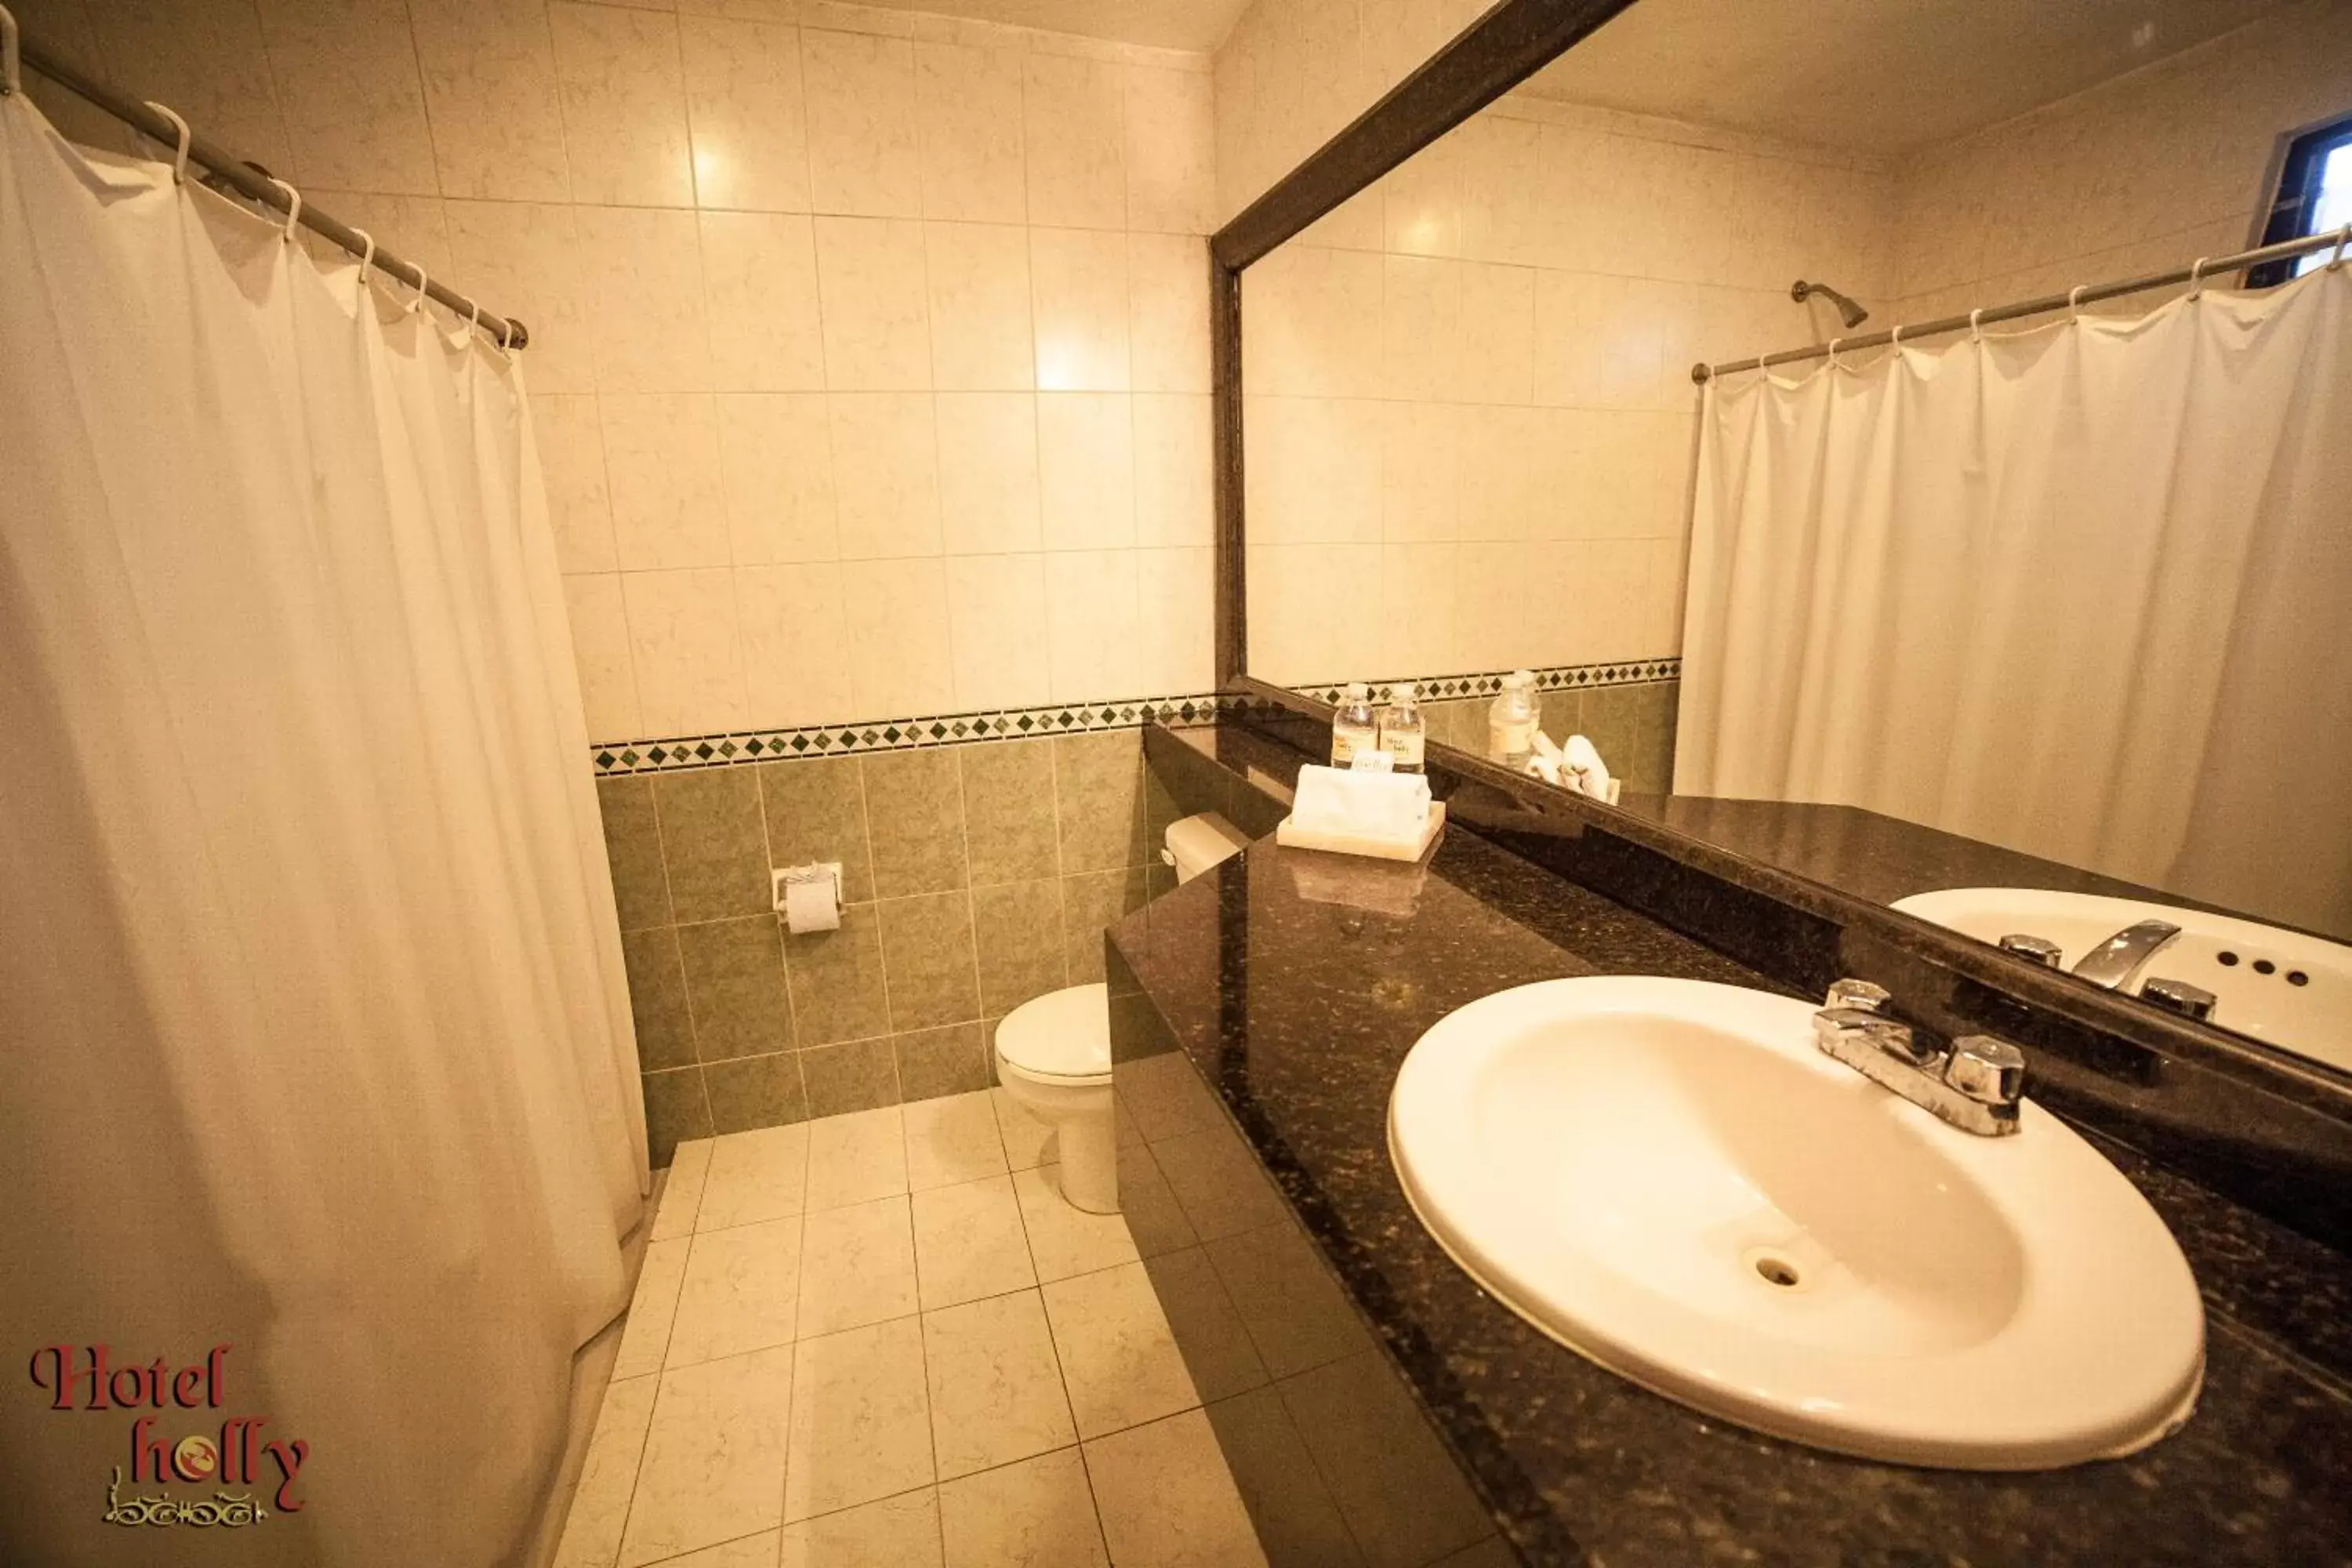 Toilet, Bathroom in Hotel Holly